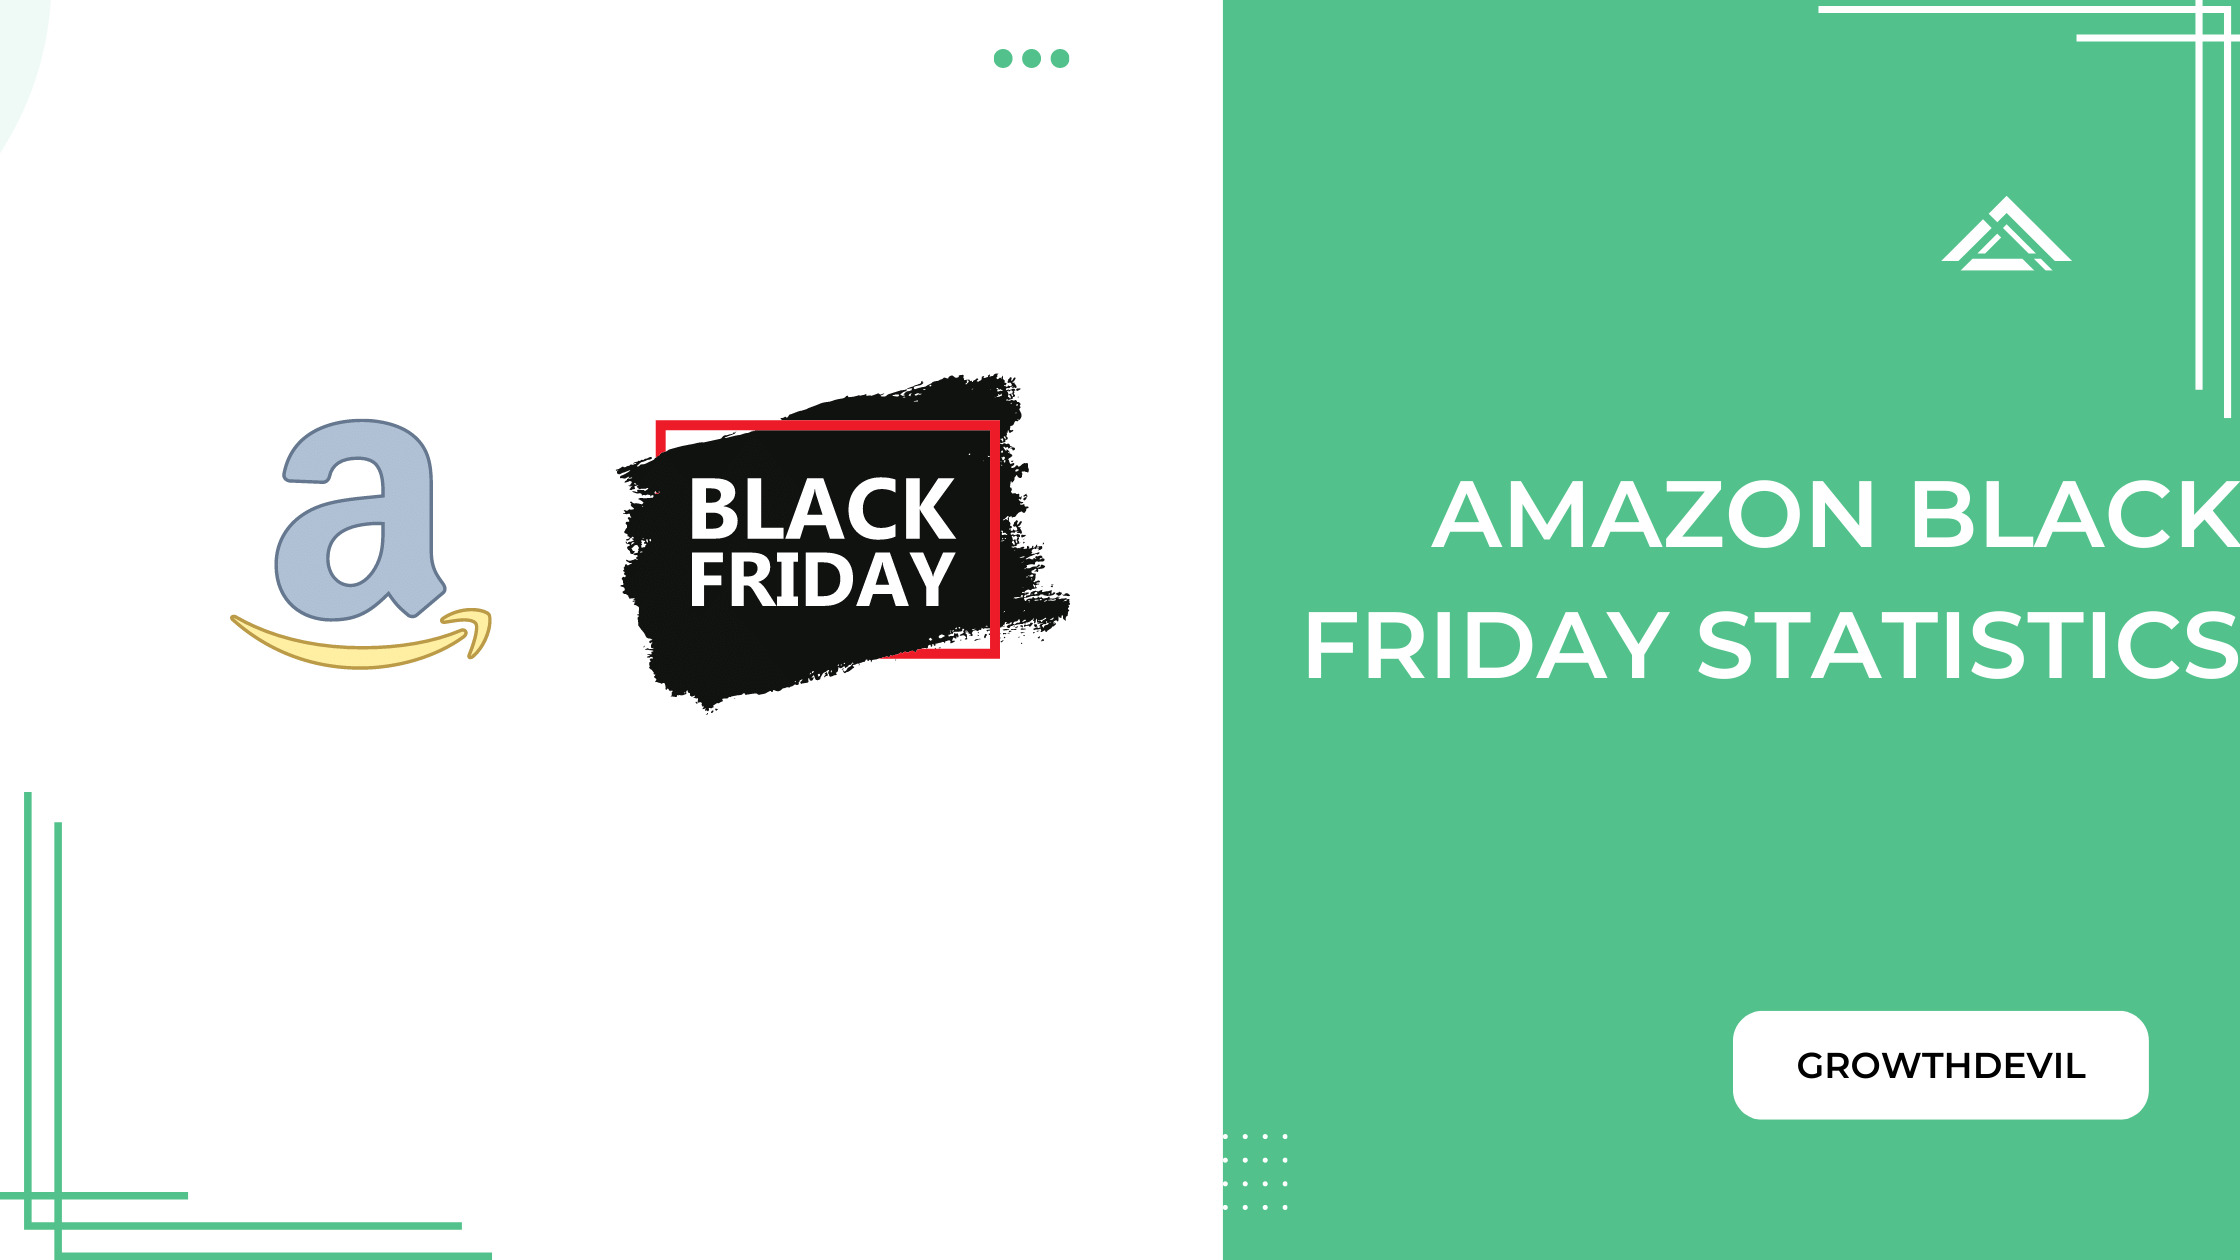 Amazon Black Friday Statistics - GrowthDevil